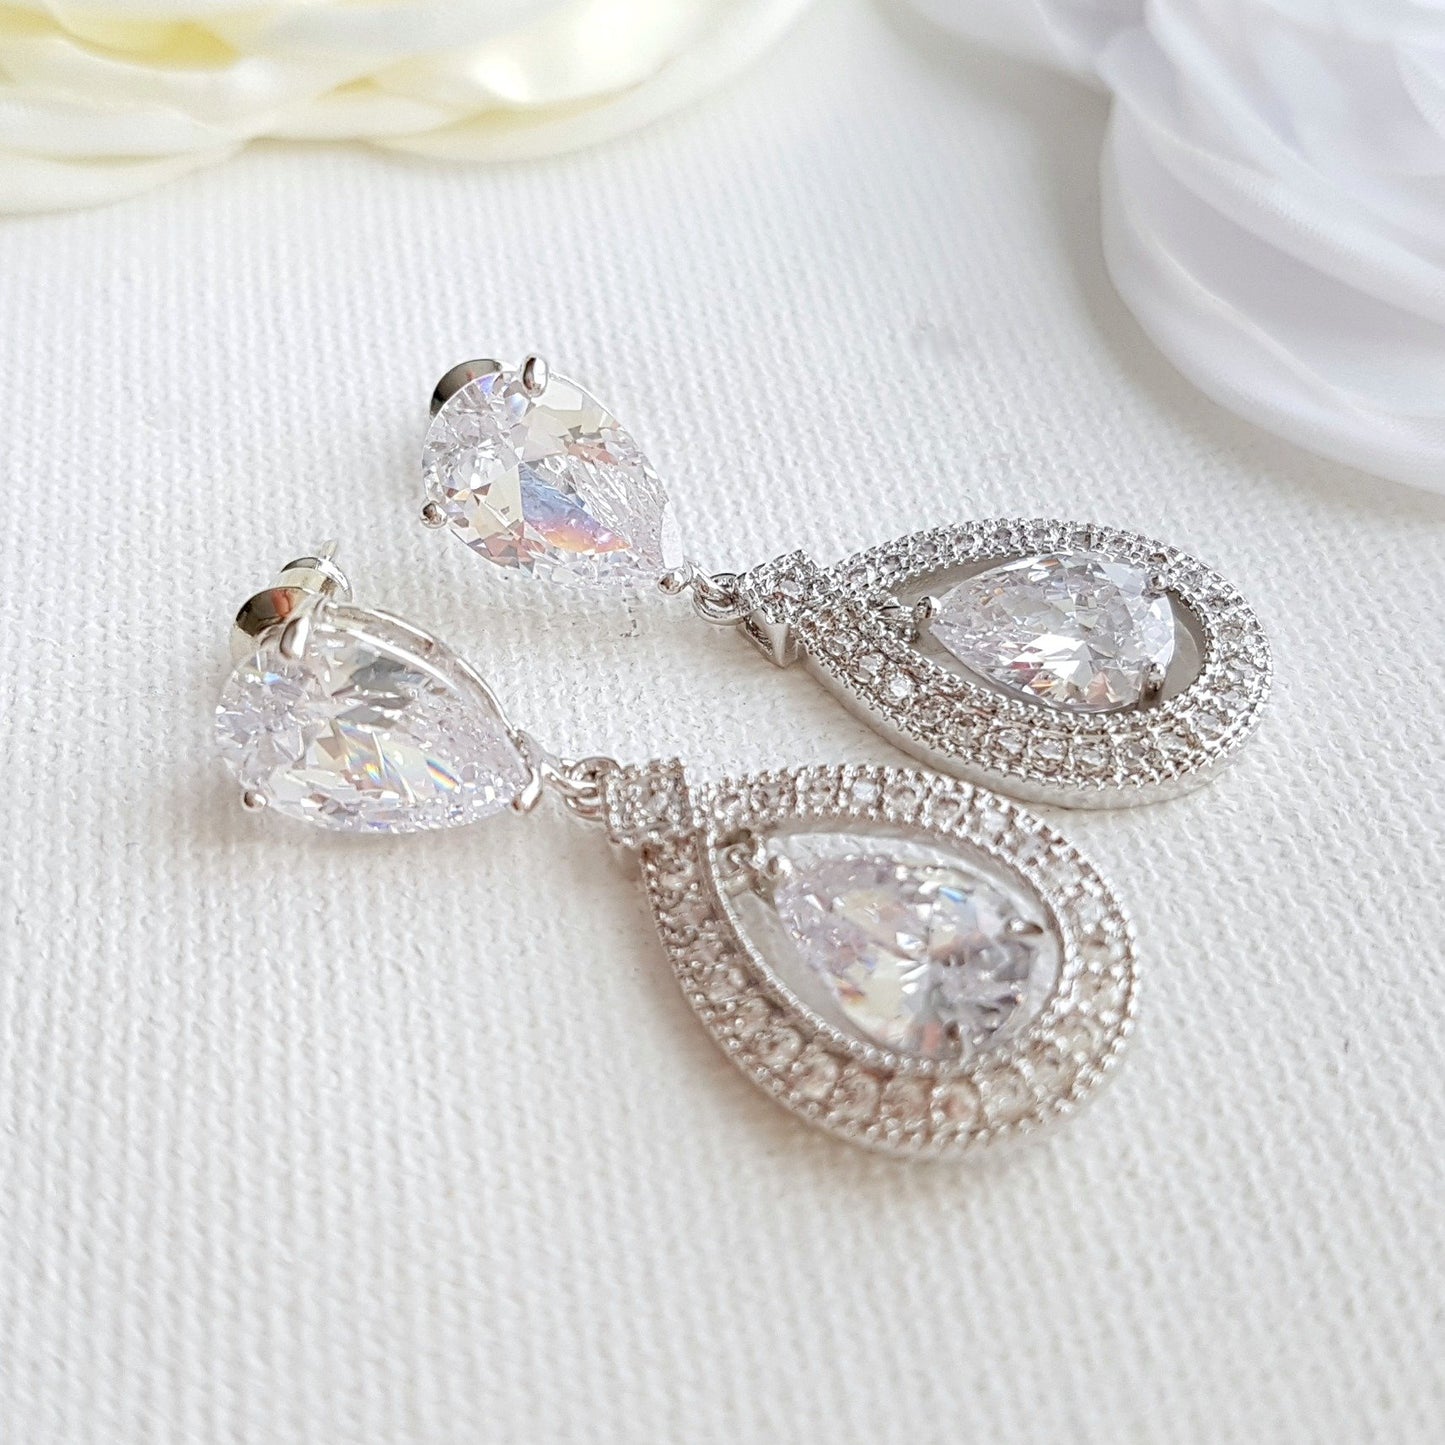 Silver Crystal Drop Bridal Earrings- Sarah